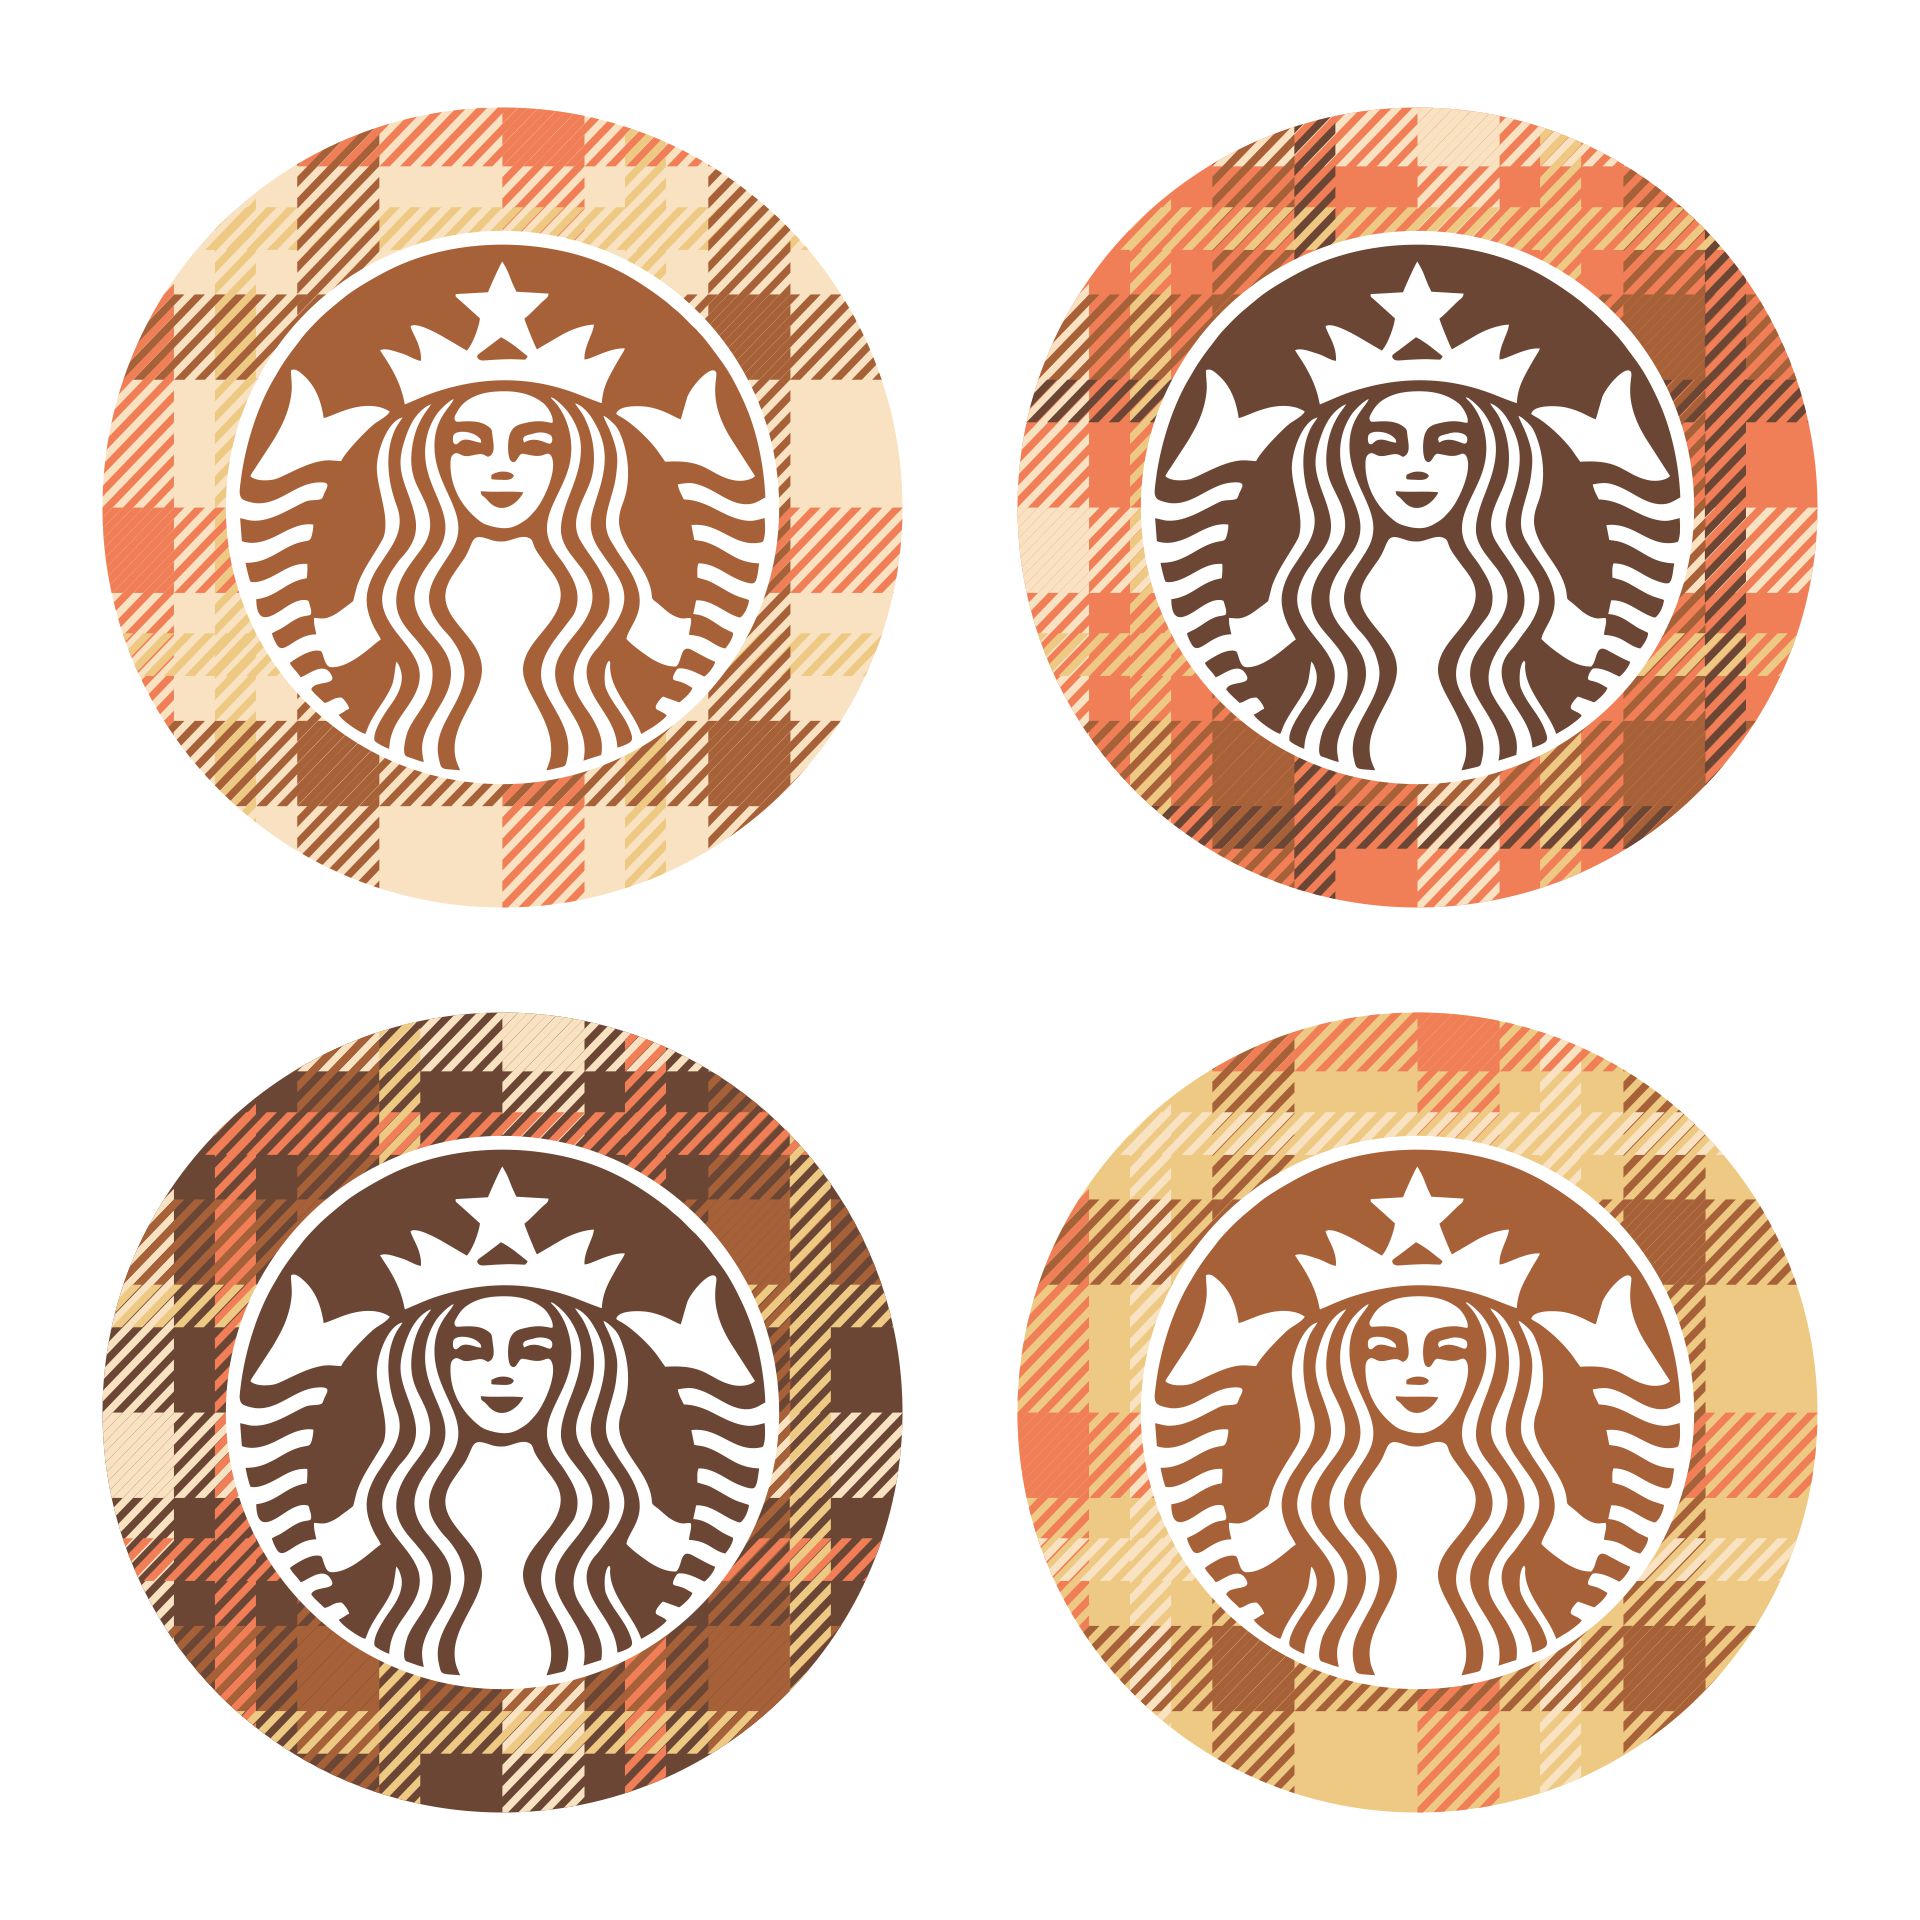 5 Best Images of Starbucks Printable Label Printable Starbucks Coffee